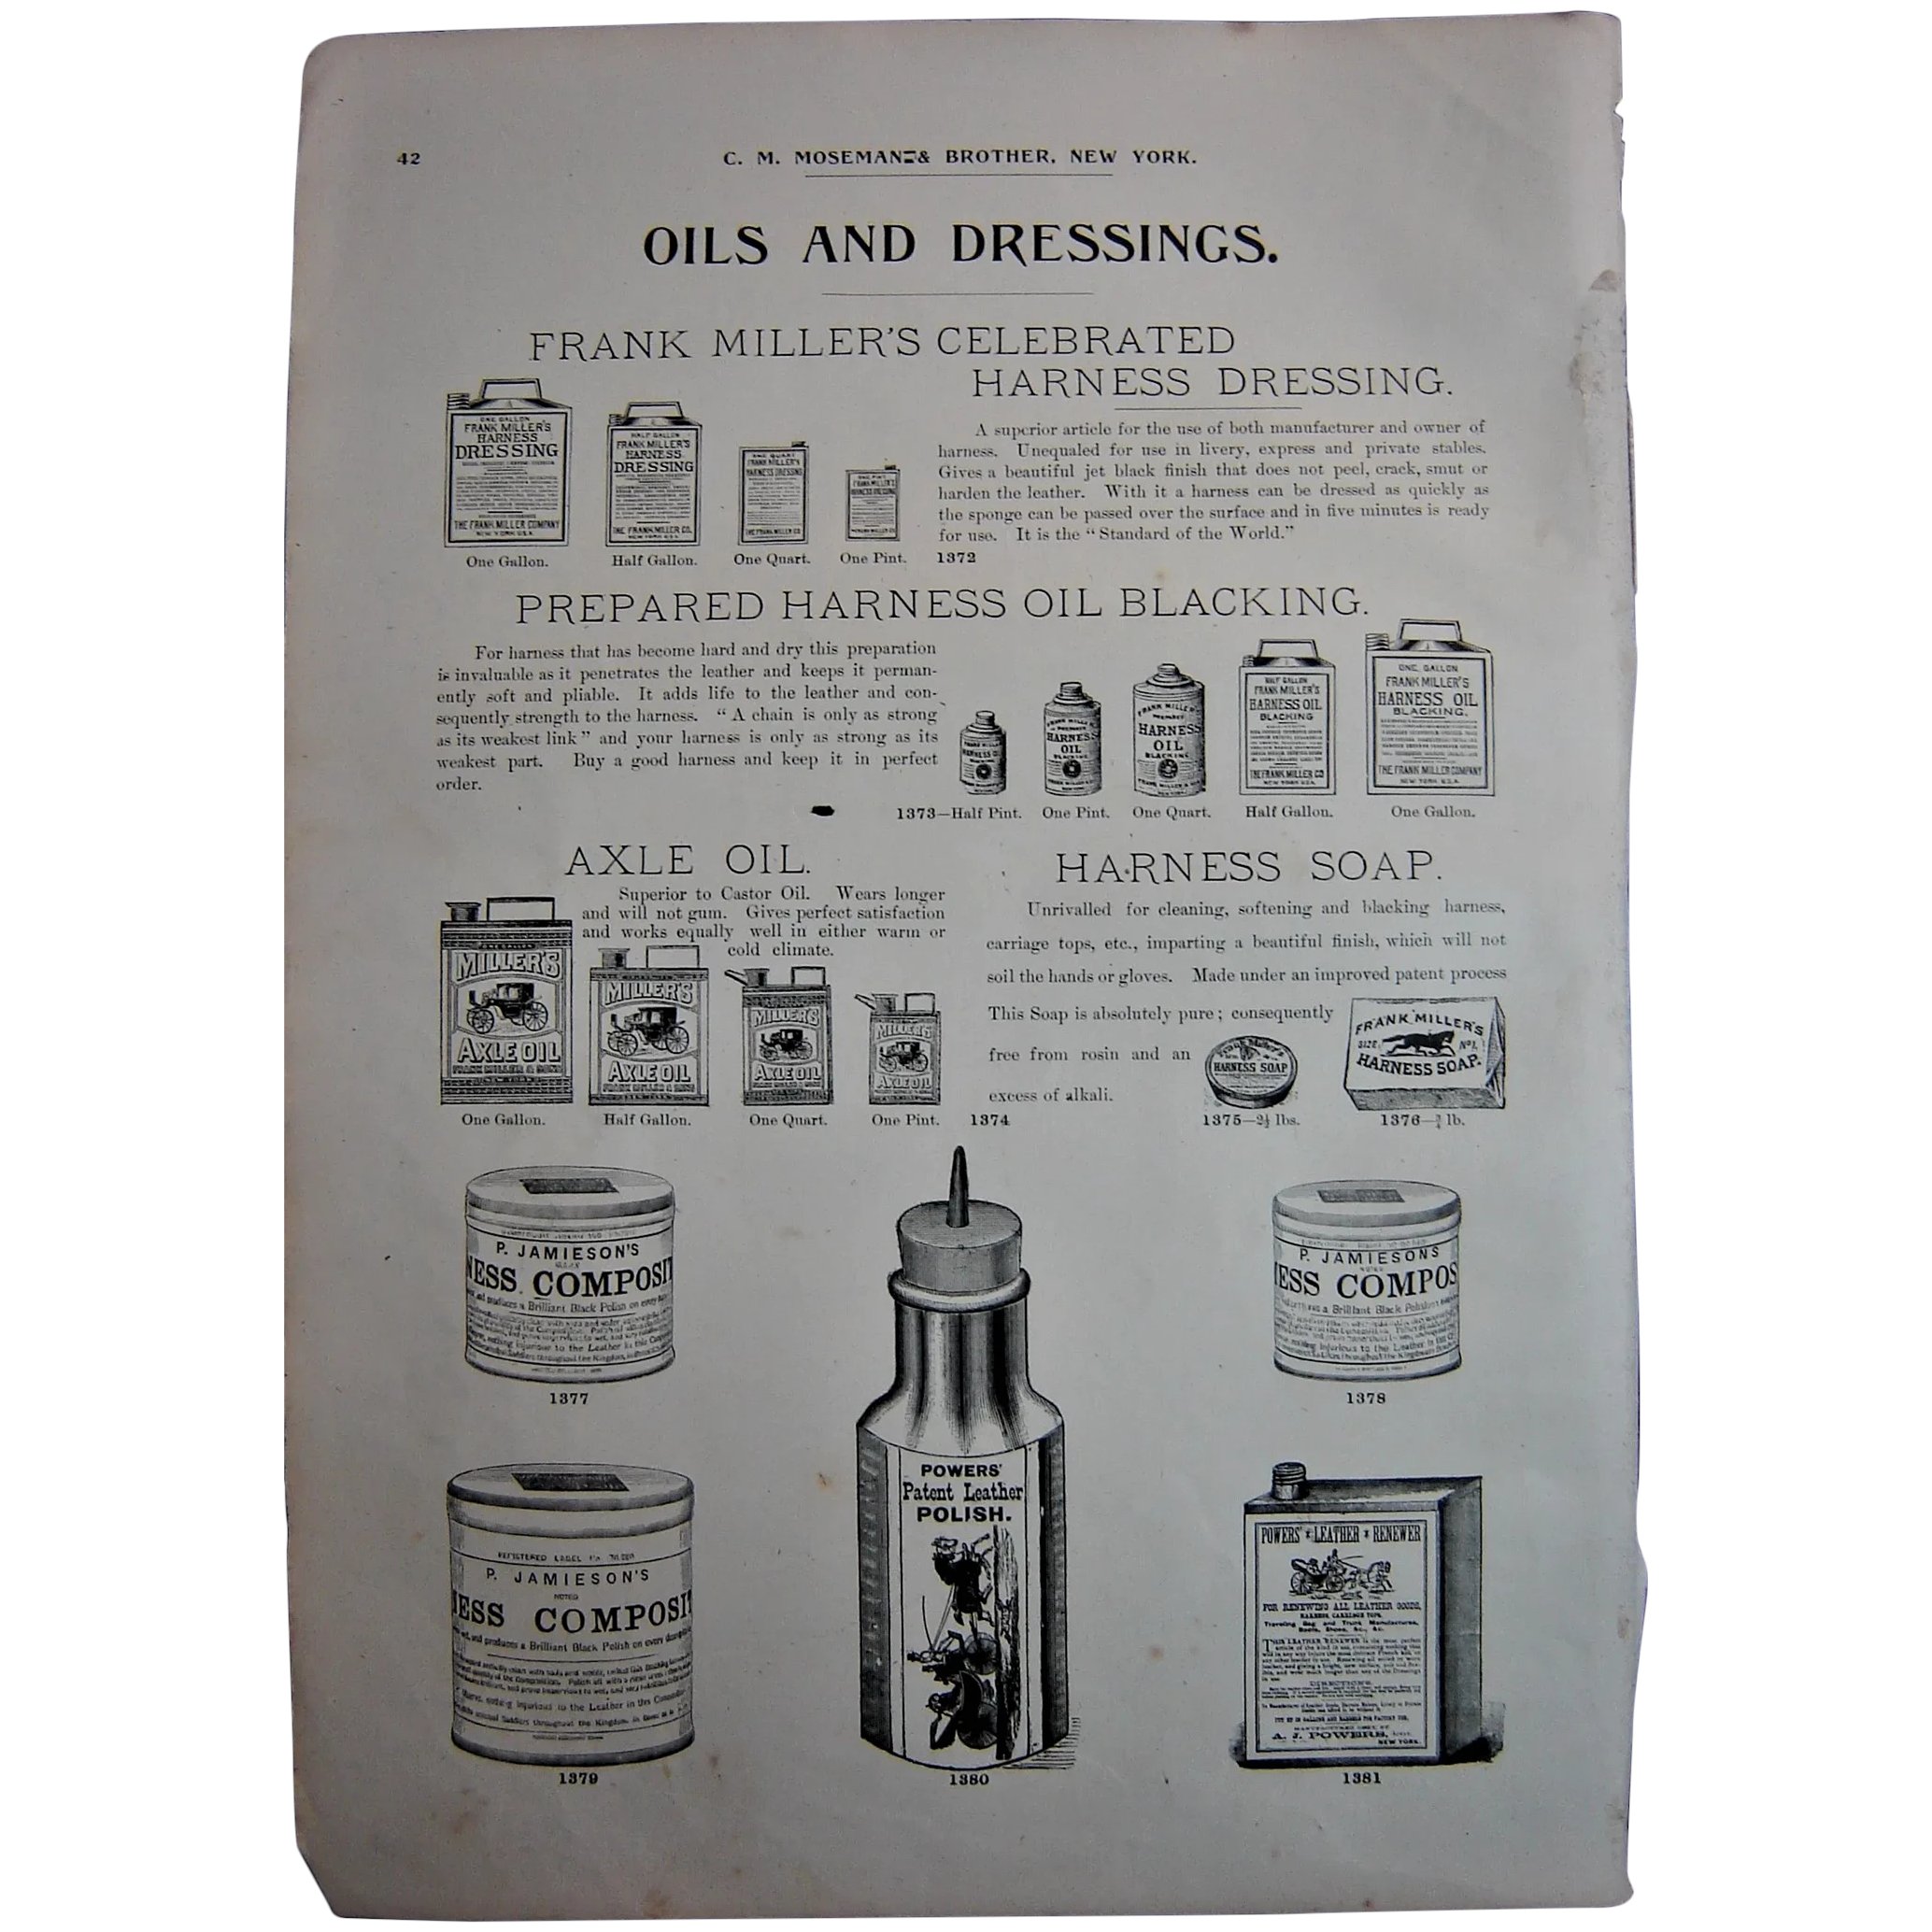 MOSEMAN'S Illustrated Guide - Original Printed 2 Side Page - Circa 1892